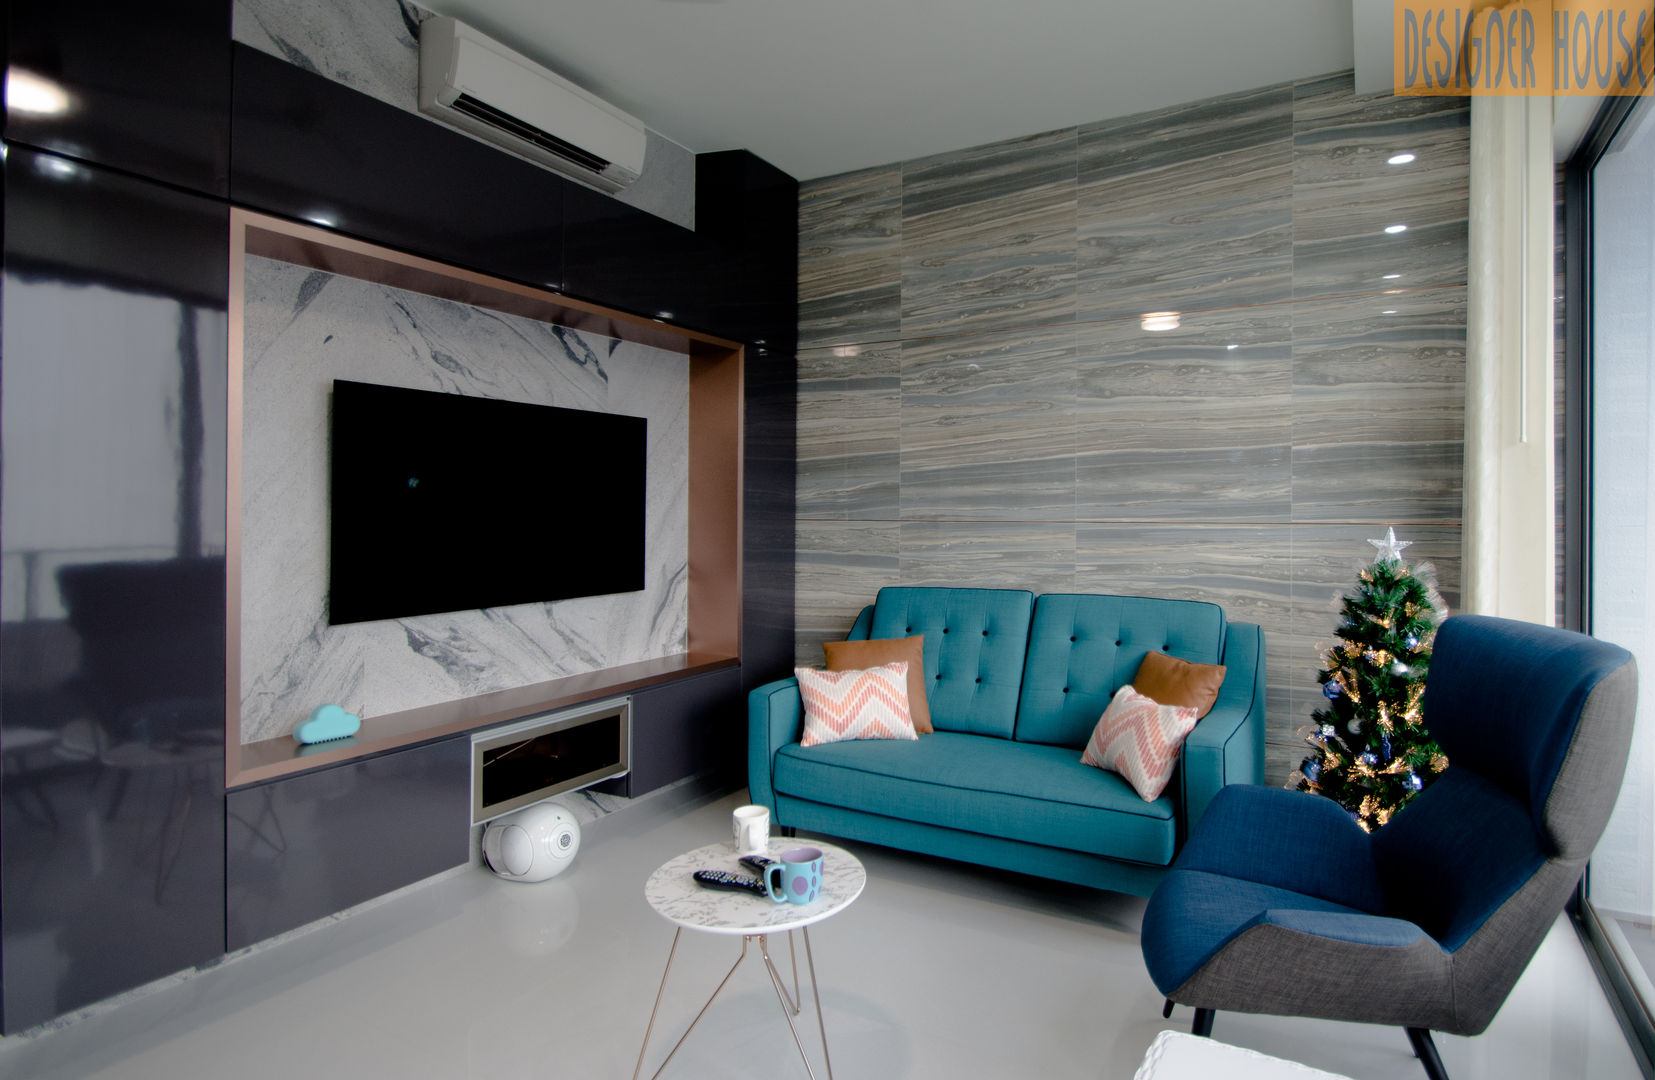 Barley Ridge Penthouse Project, Designer House Designer House Livings modernos: Ideas, imágenes y decoración Caliza